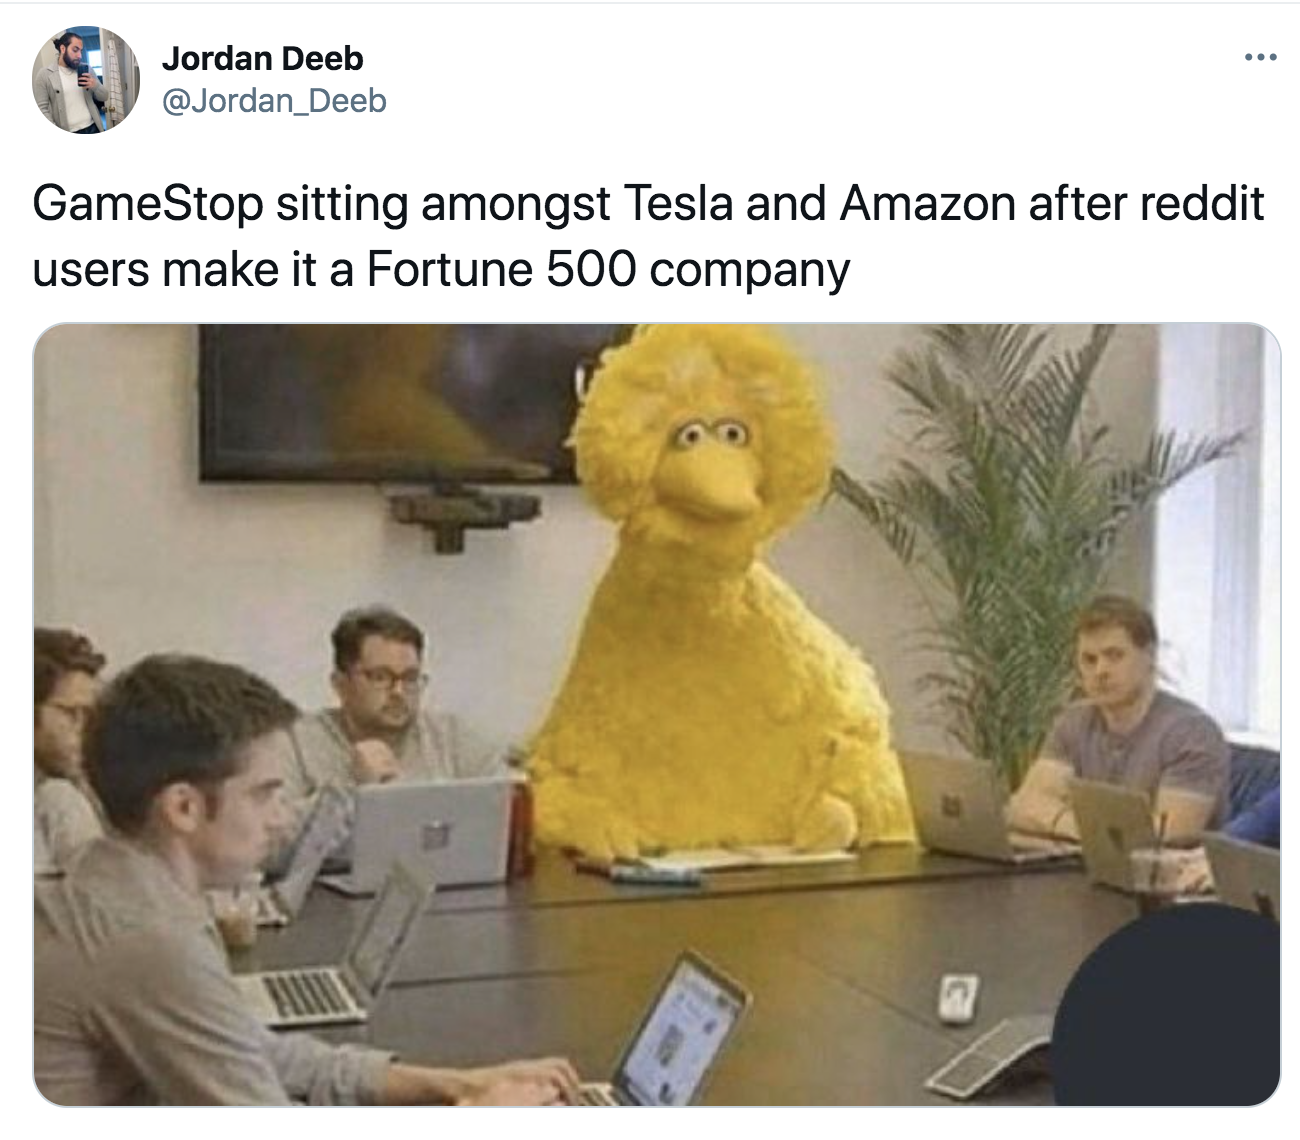 imposter among us memes - Jordan Deeb GameStop sitting amongst Tesla and Amazon after reddit users make it a Fortune 500 company